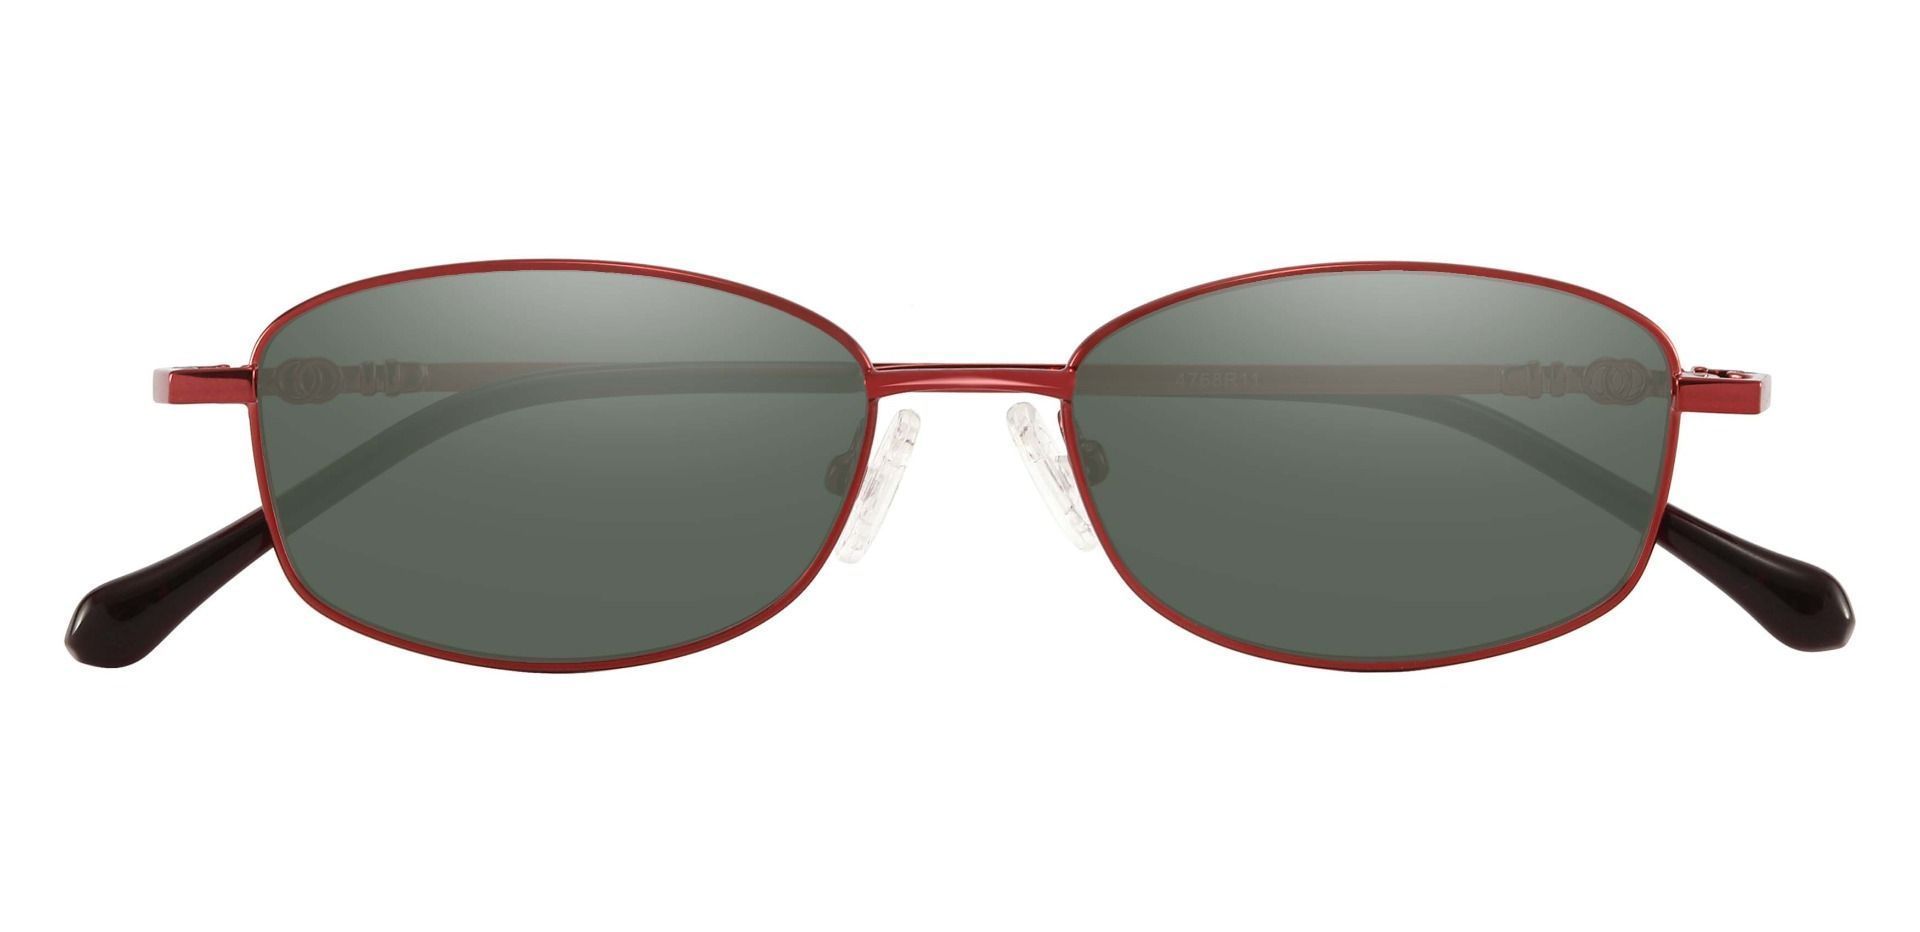 Naples Rectangle Prescription Sunglasses - Red Frame With Green Lenses